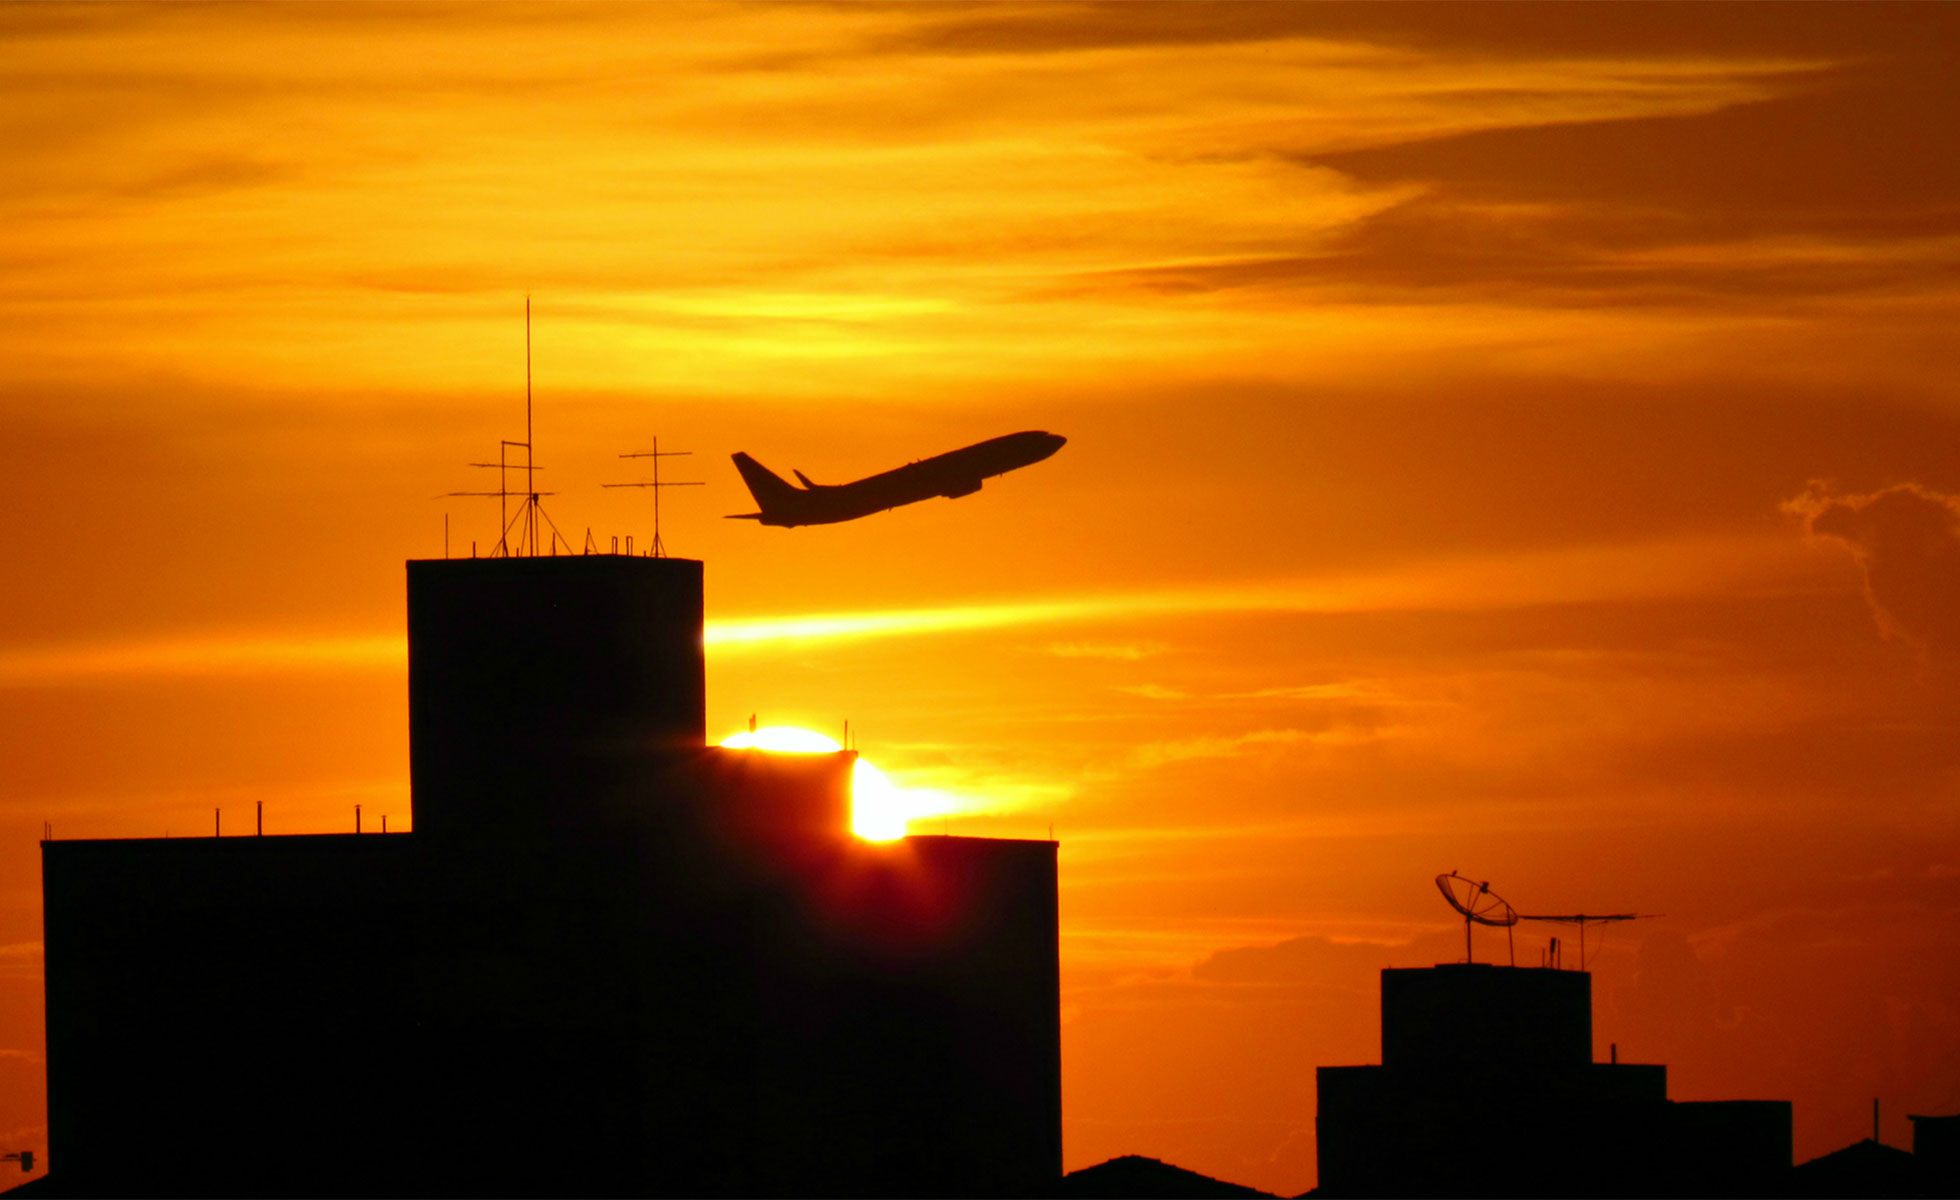 Airplane at sunset